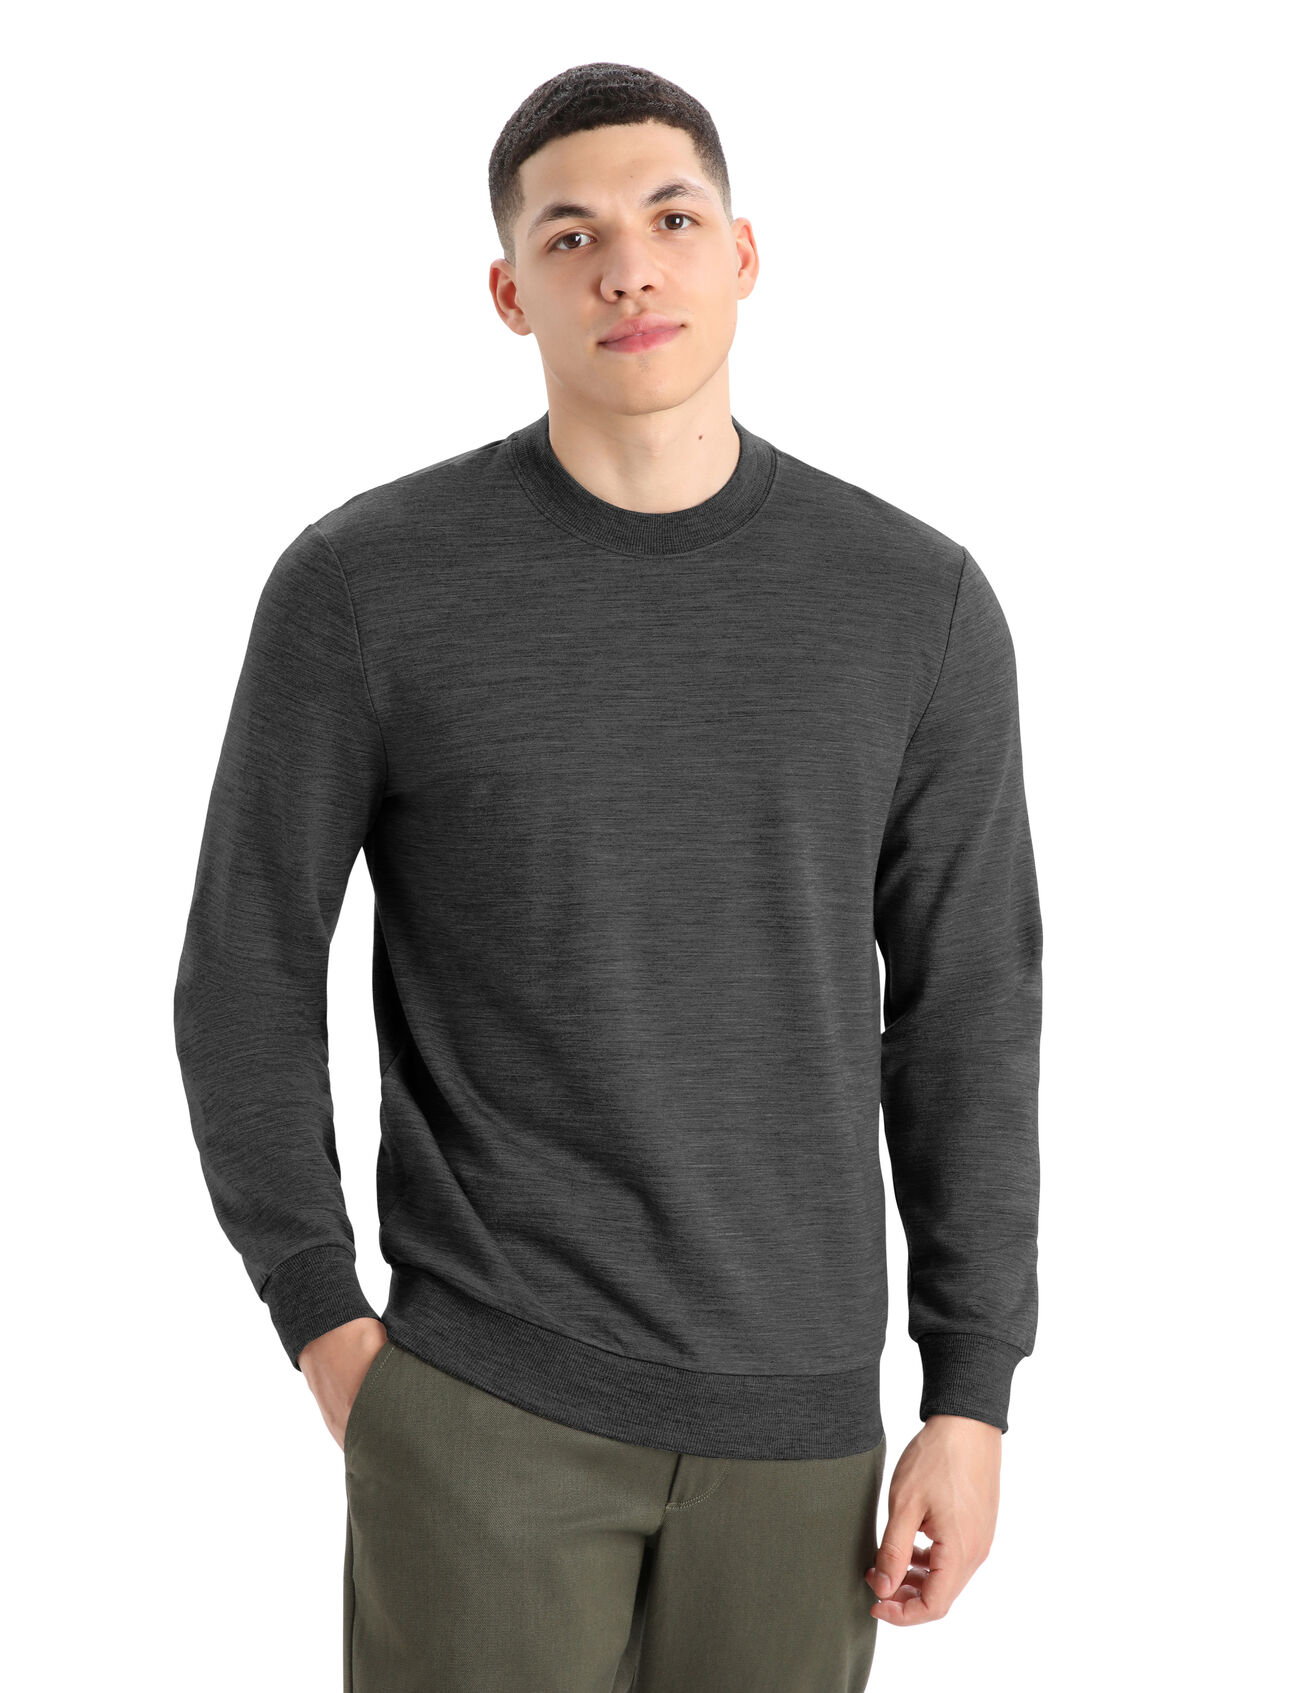 Mens Merino Shifter Long Sleeve Sweatshirt A classic and stylish sweatshirt made with soft, comfortable, 100% merino terry fabric, the Shifter Long Sleeve Sweatshirt offers versatile everyday layering performance.